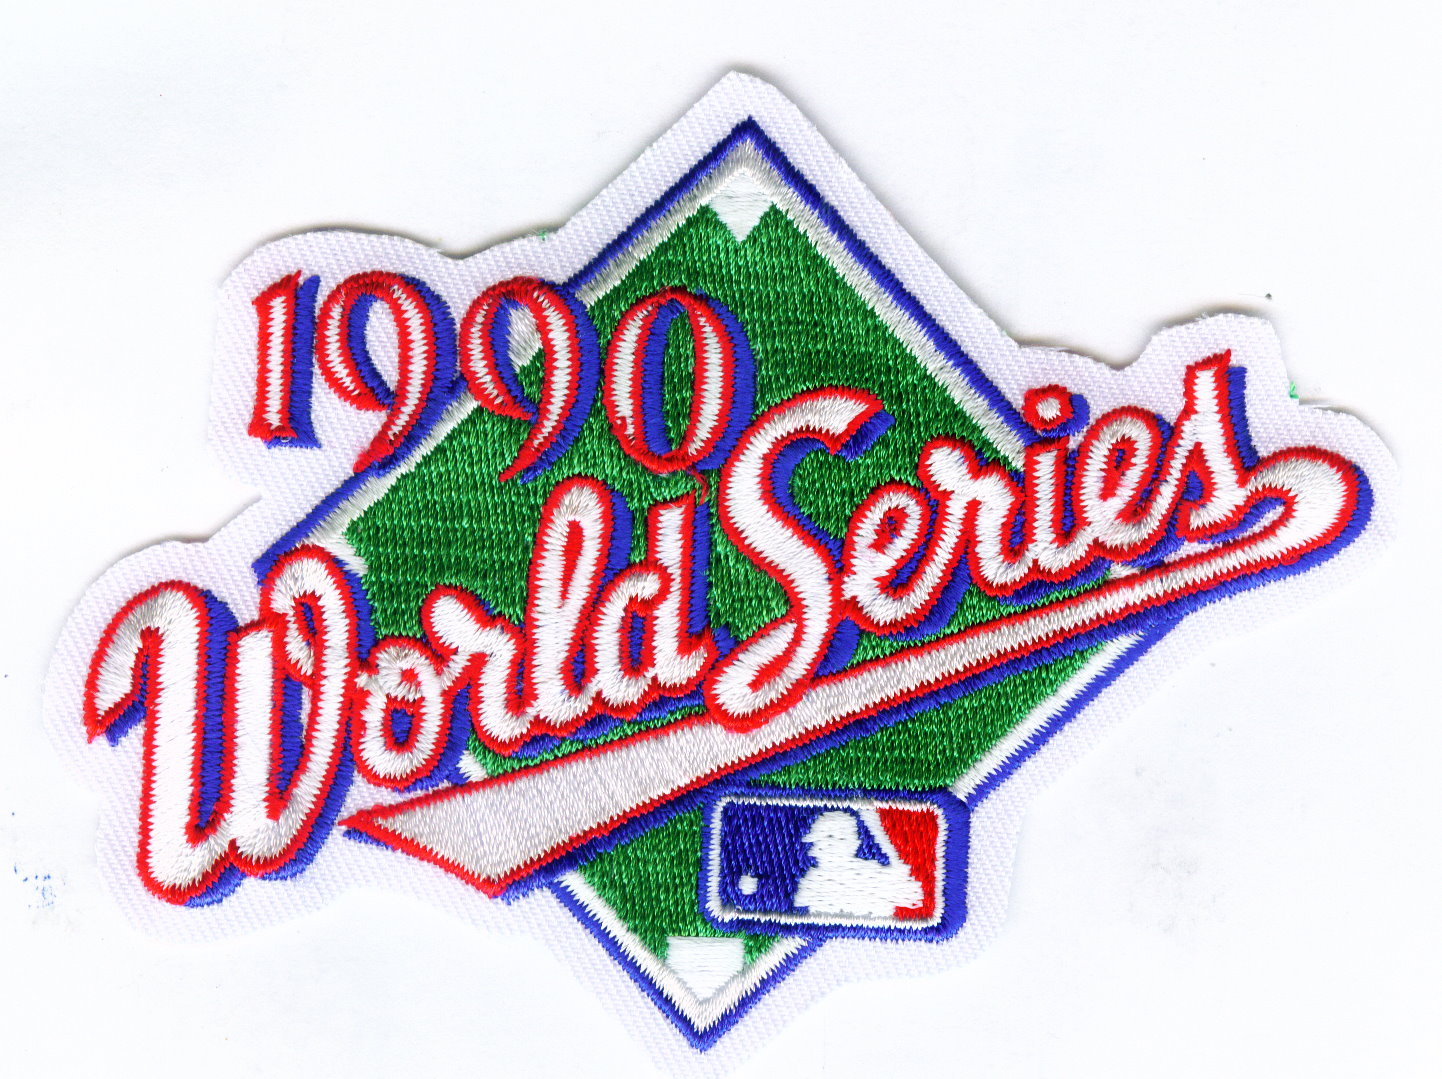 1990 World Series Patch – The Emblem Source